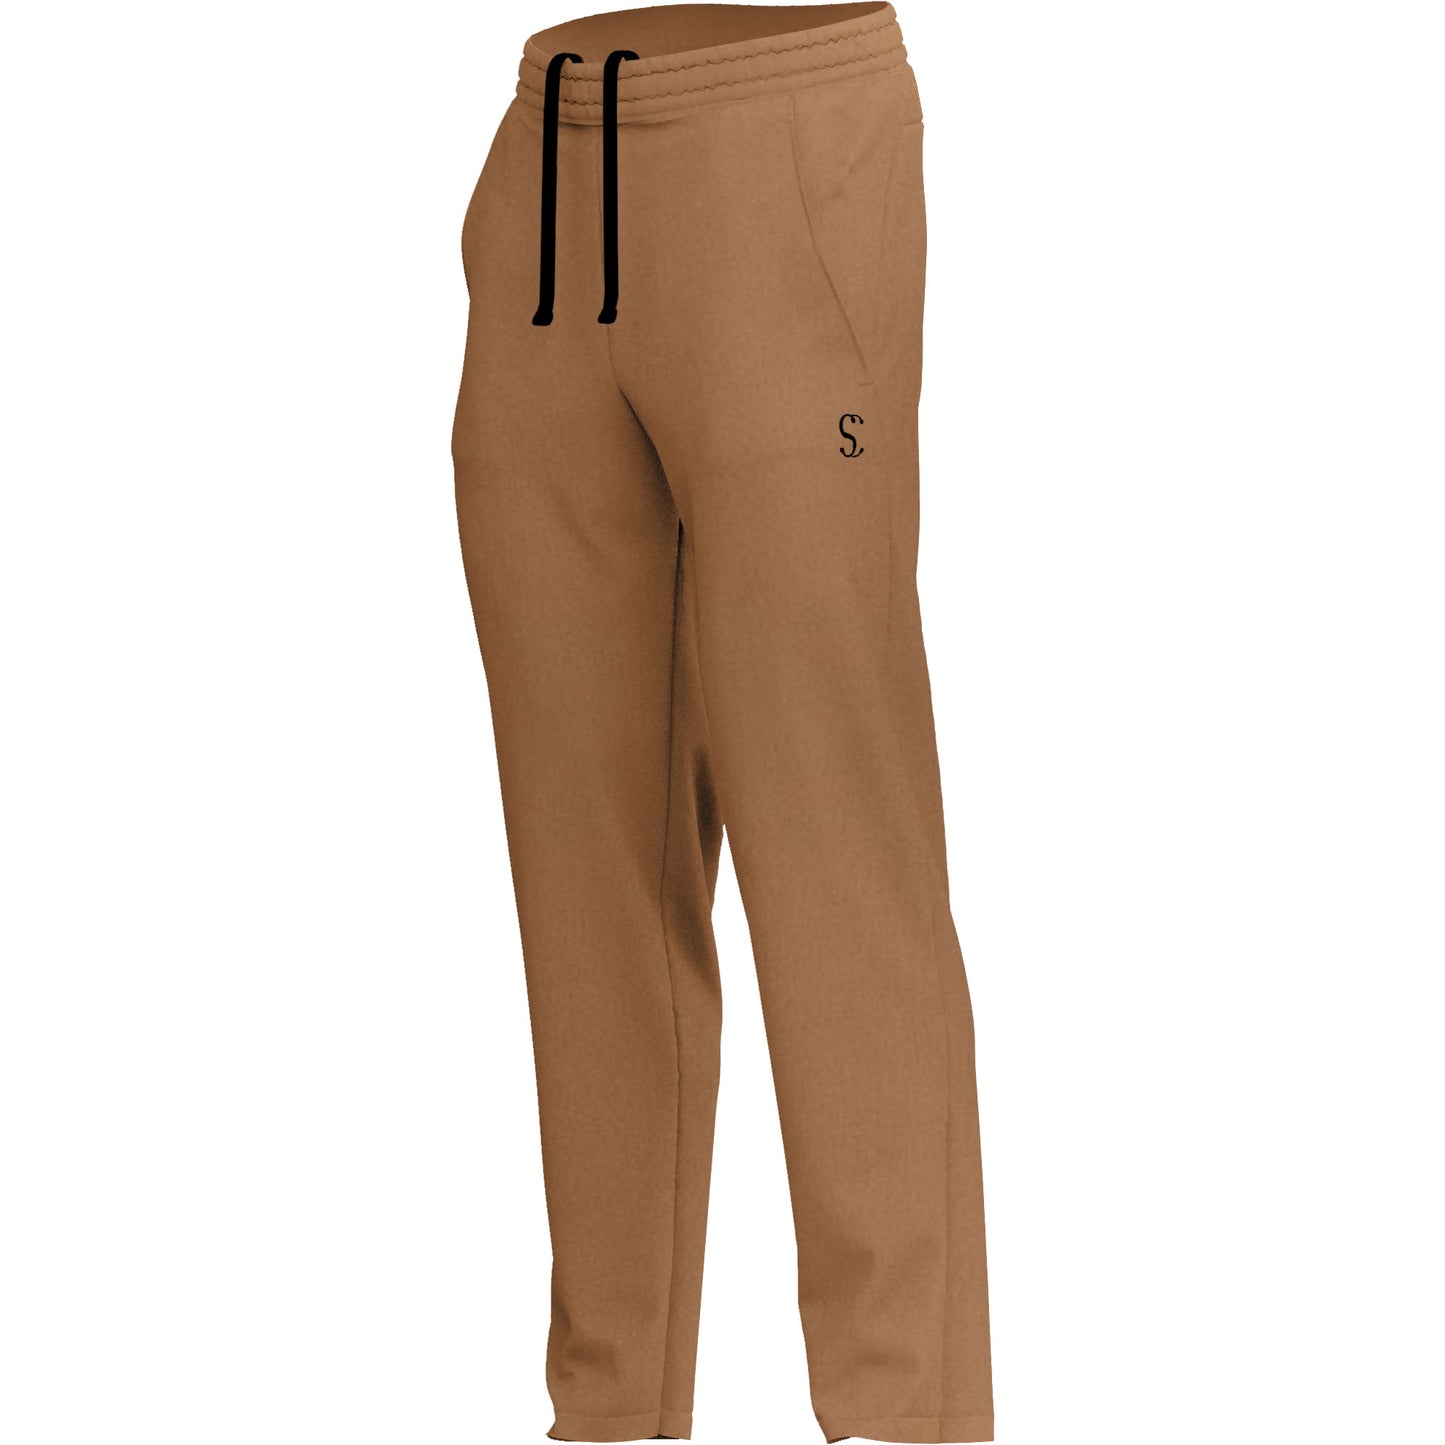 Sporty Clad Men's Brown Sweatpants Thermal Cotton Fleece Loungewear